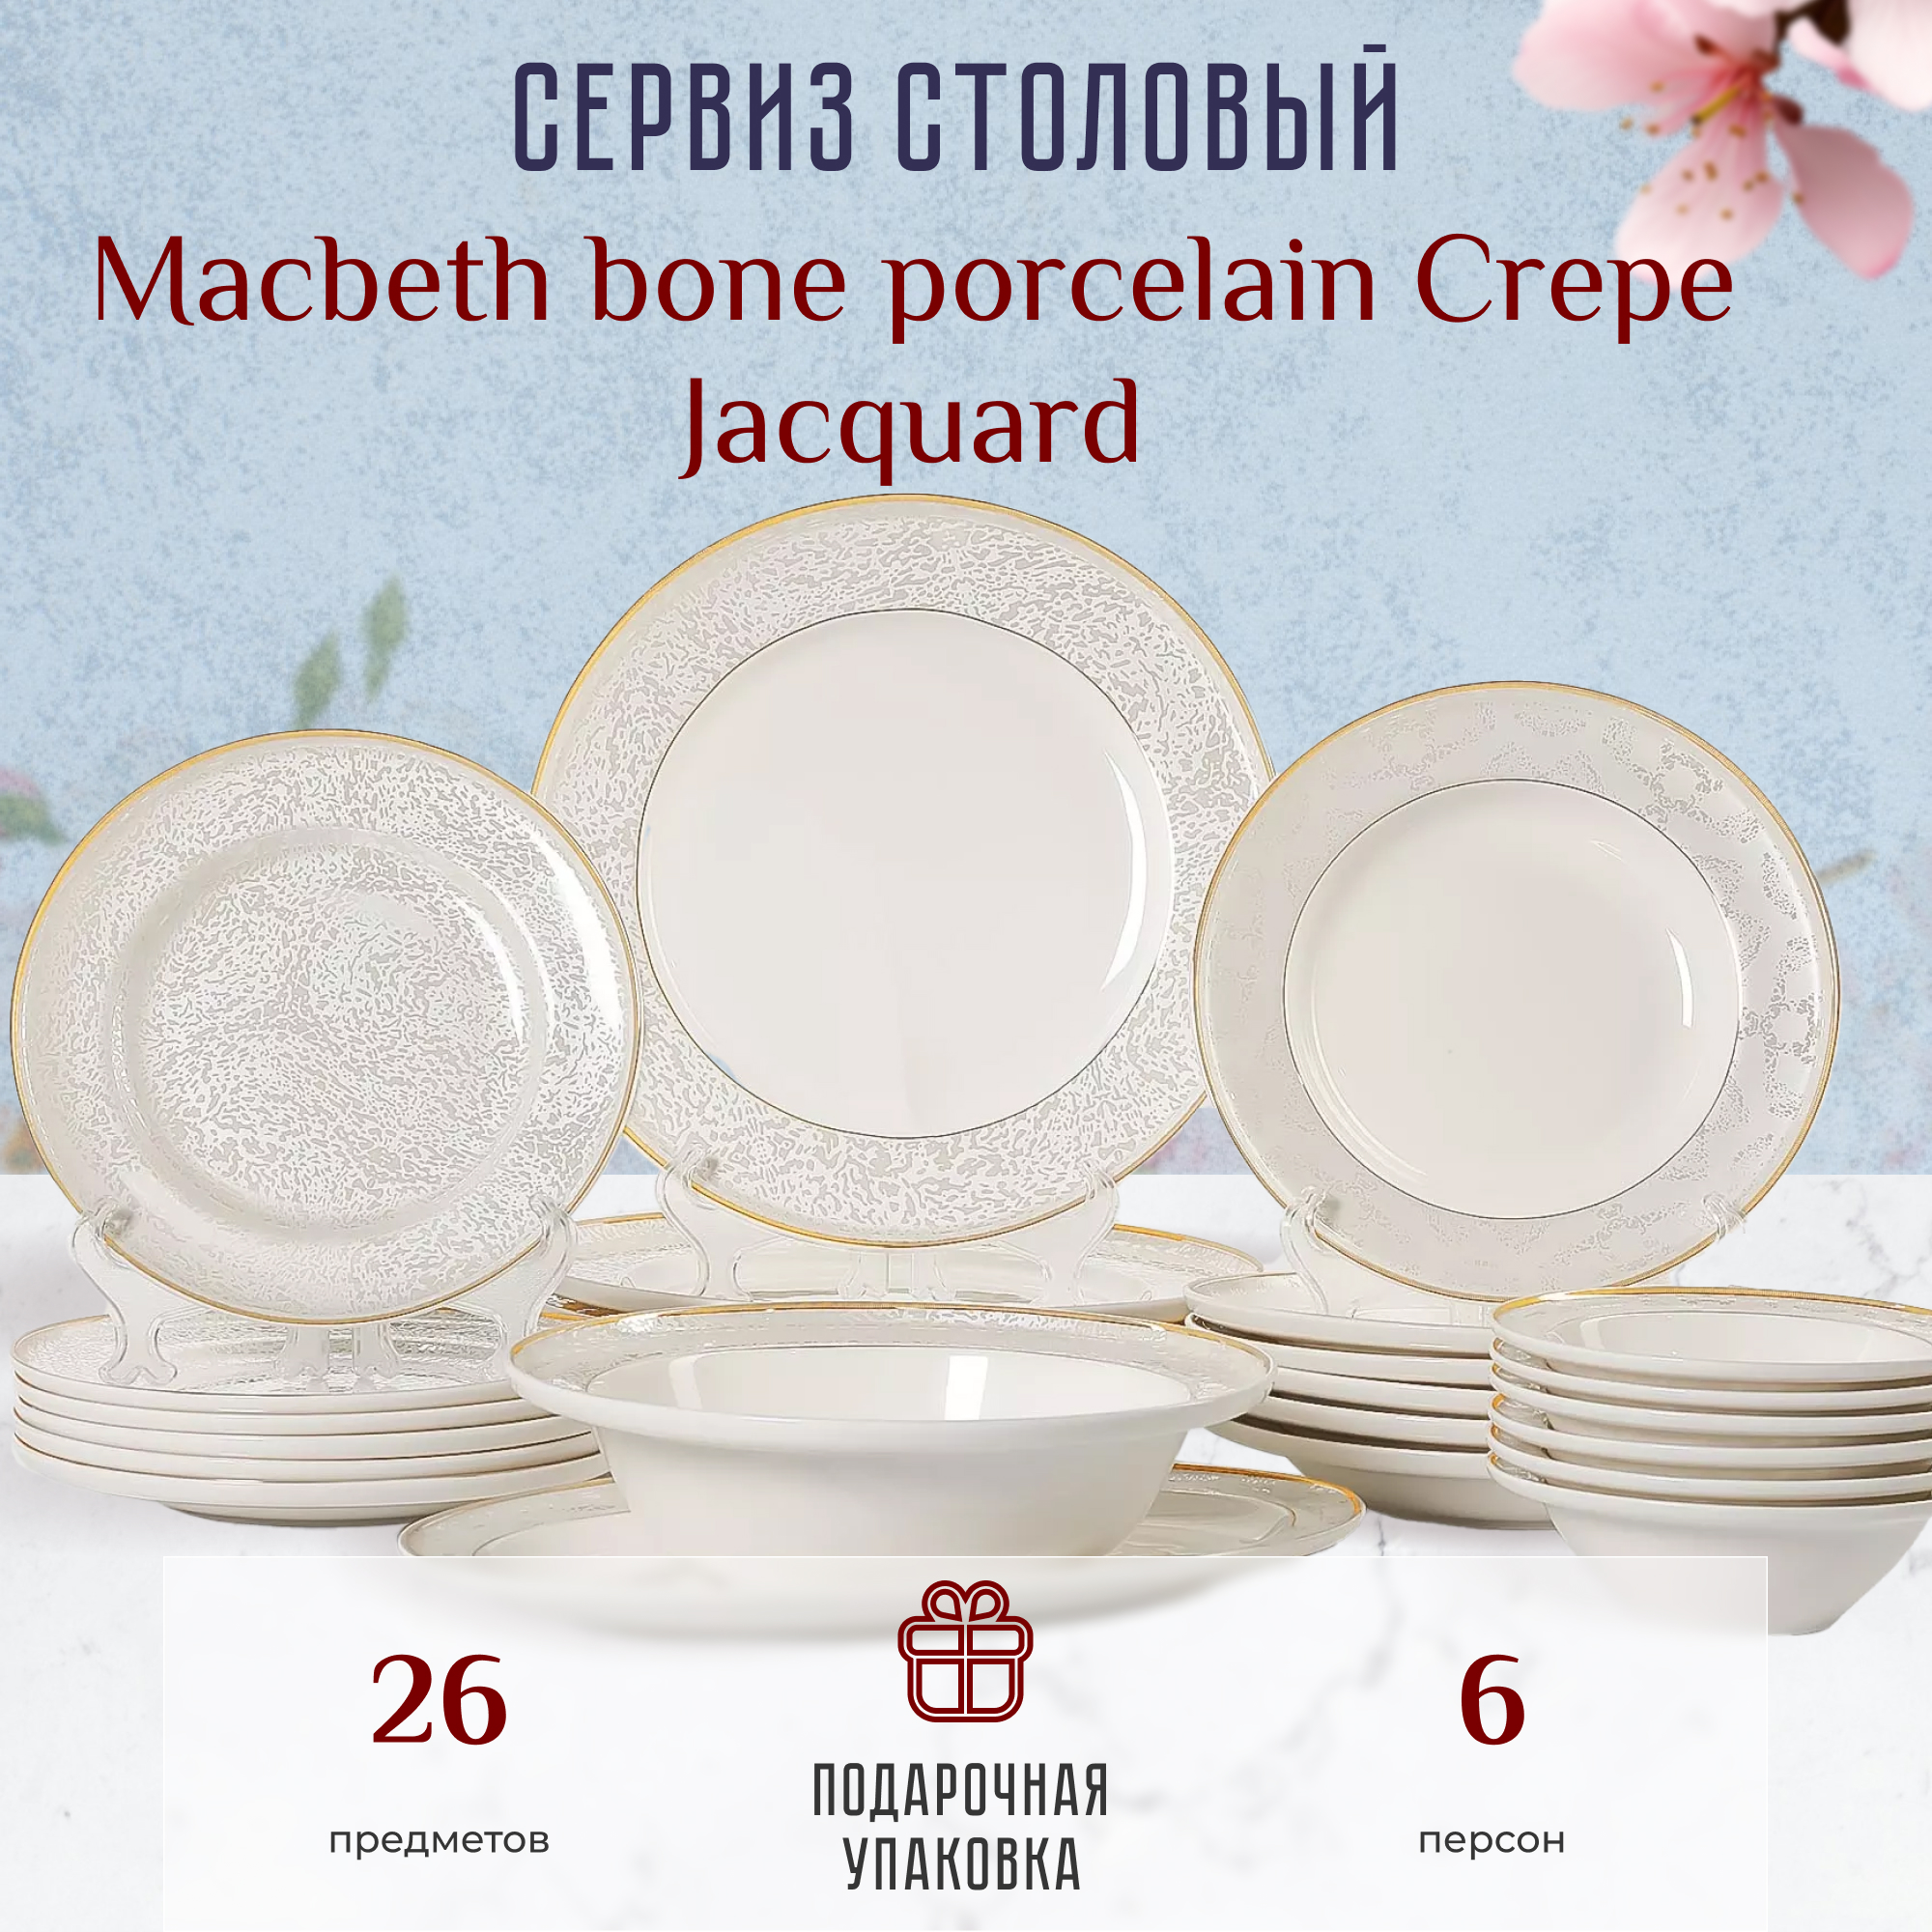 Сервиз столовый Macbeth bone porcelain Crepe Jacquard 26 предметов 6 персон - фото 3